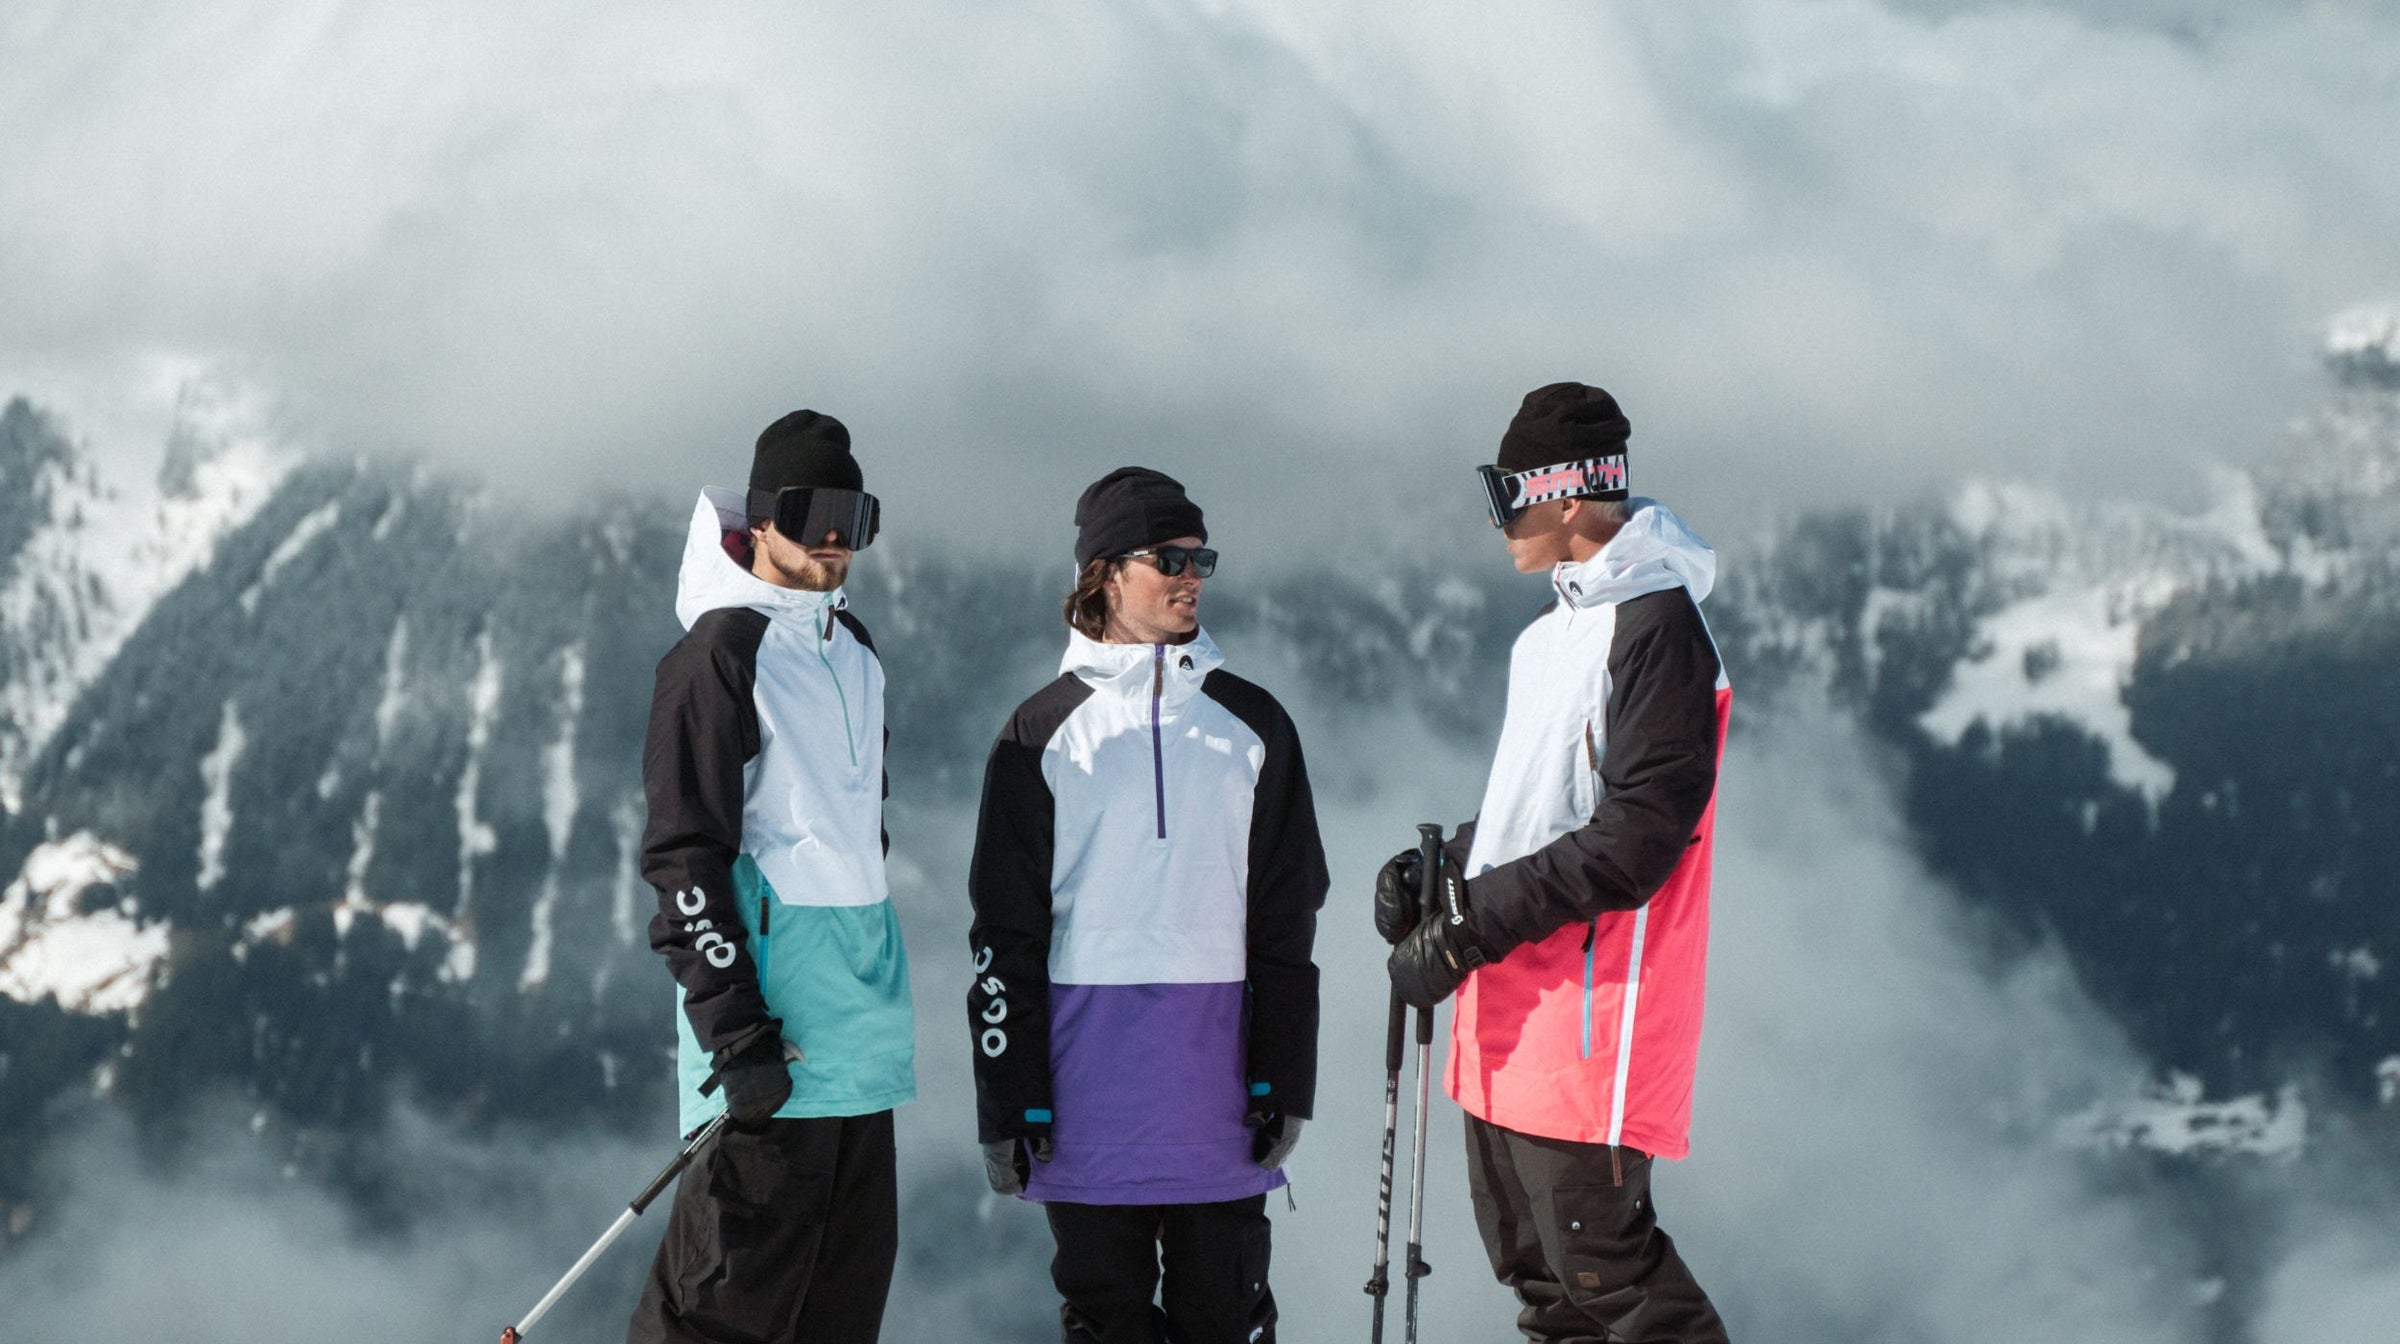 Women's Ski Salopettes  Colourful Pants – OOSC Clothing